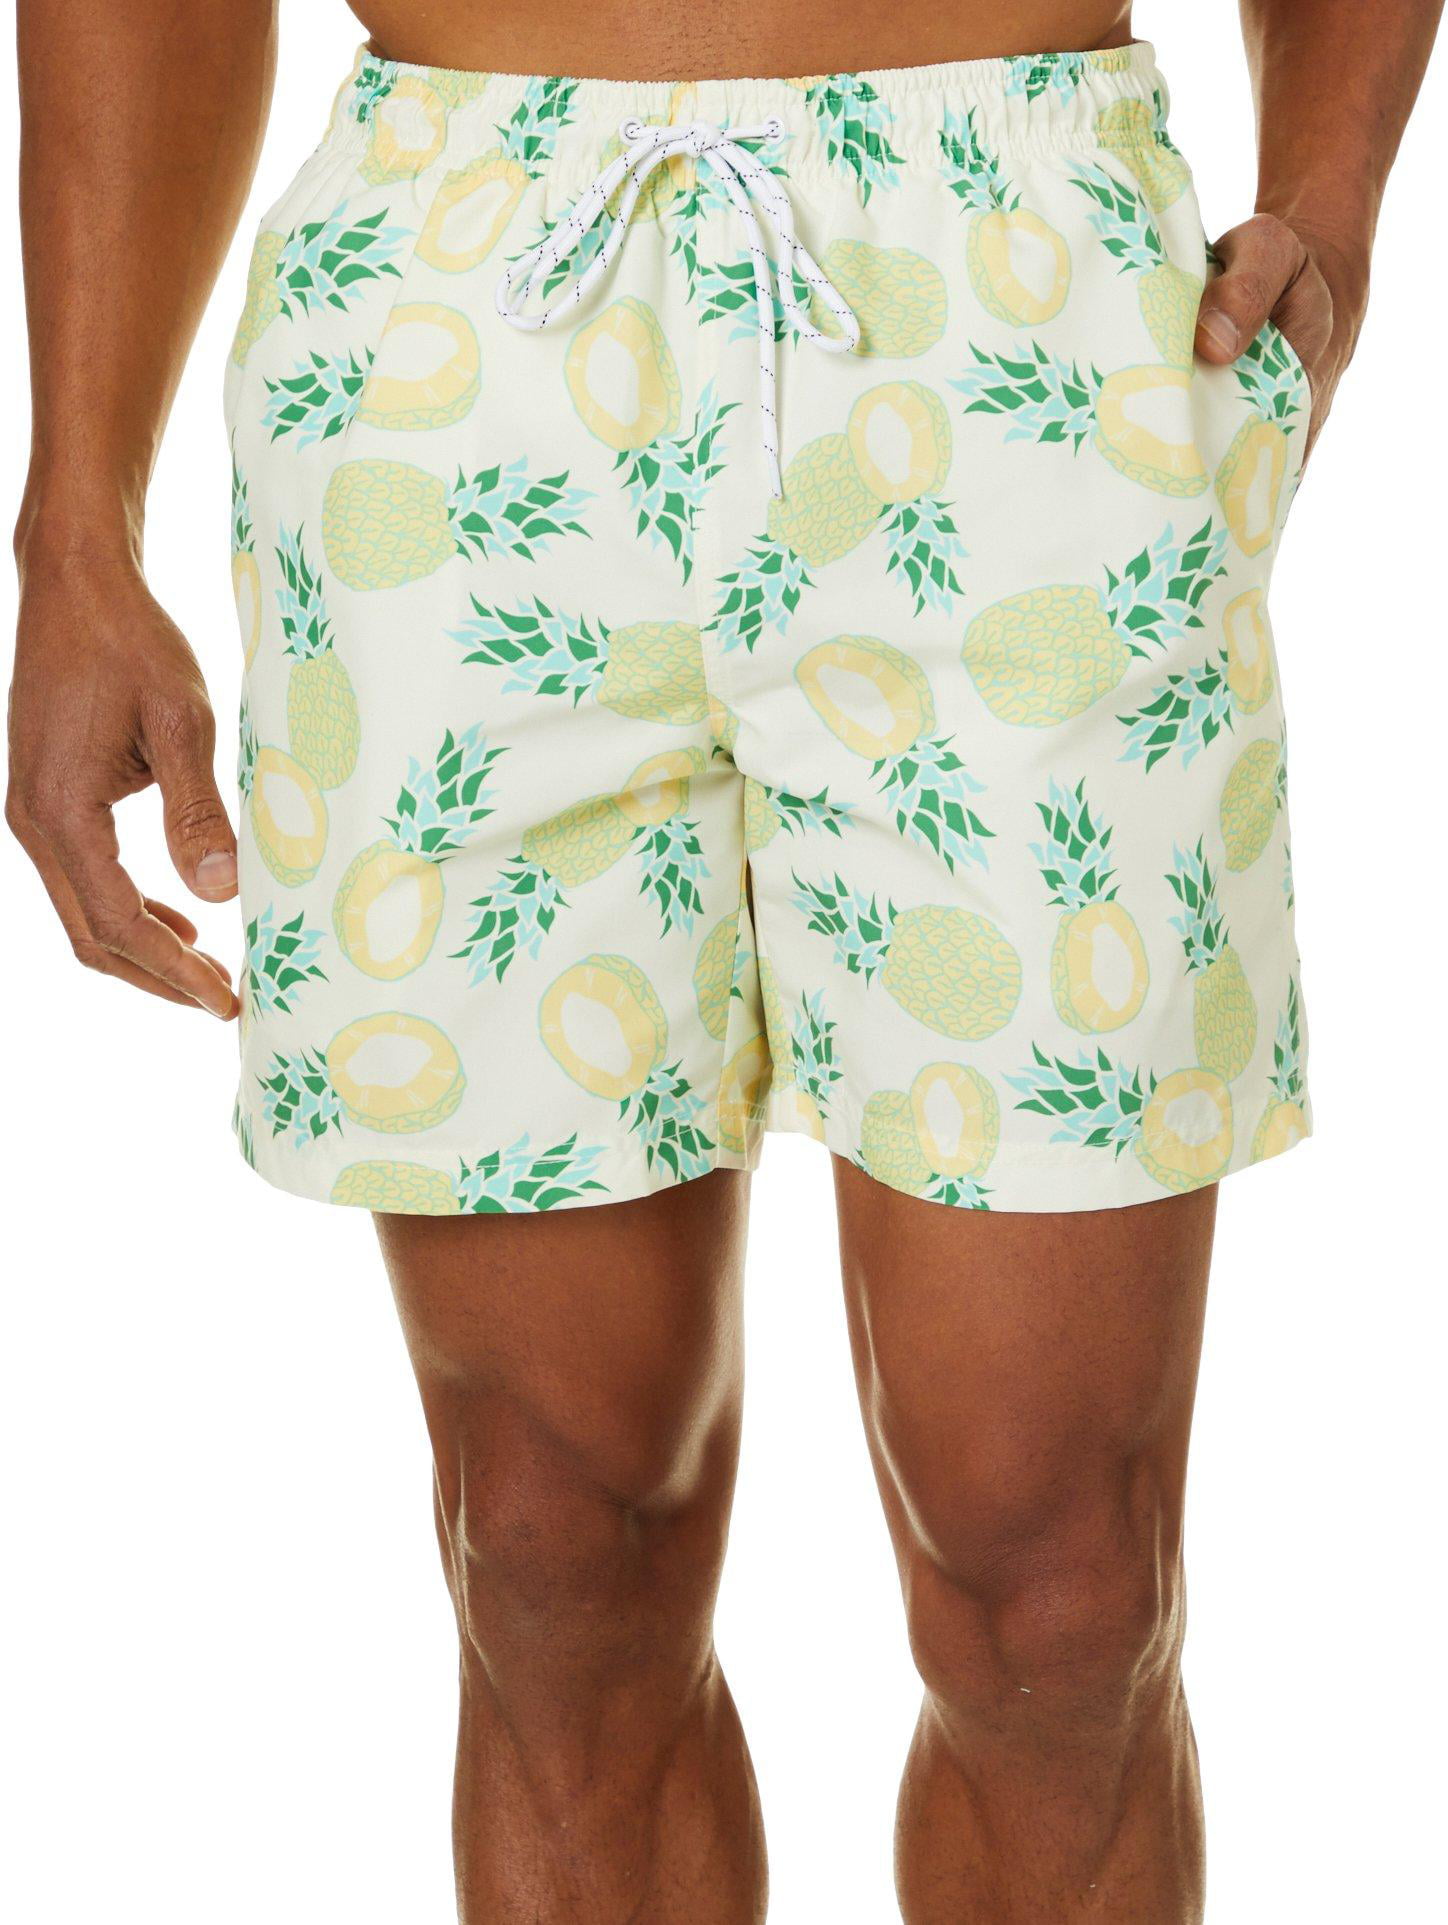 Fashion Swim Trunks Mens Board Shorts Orange Pineapple with Love Green Quick Dry Shorts